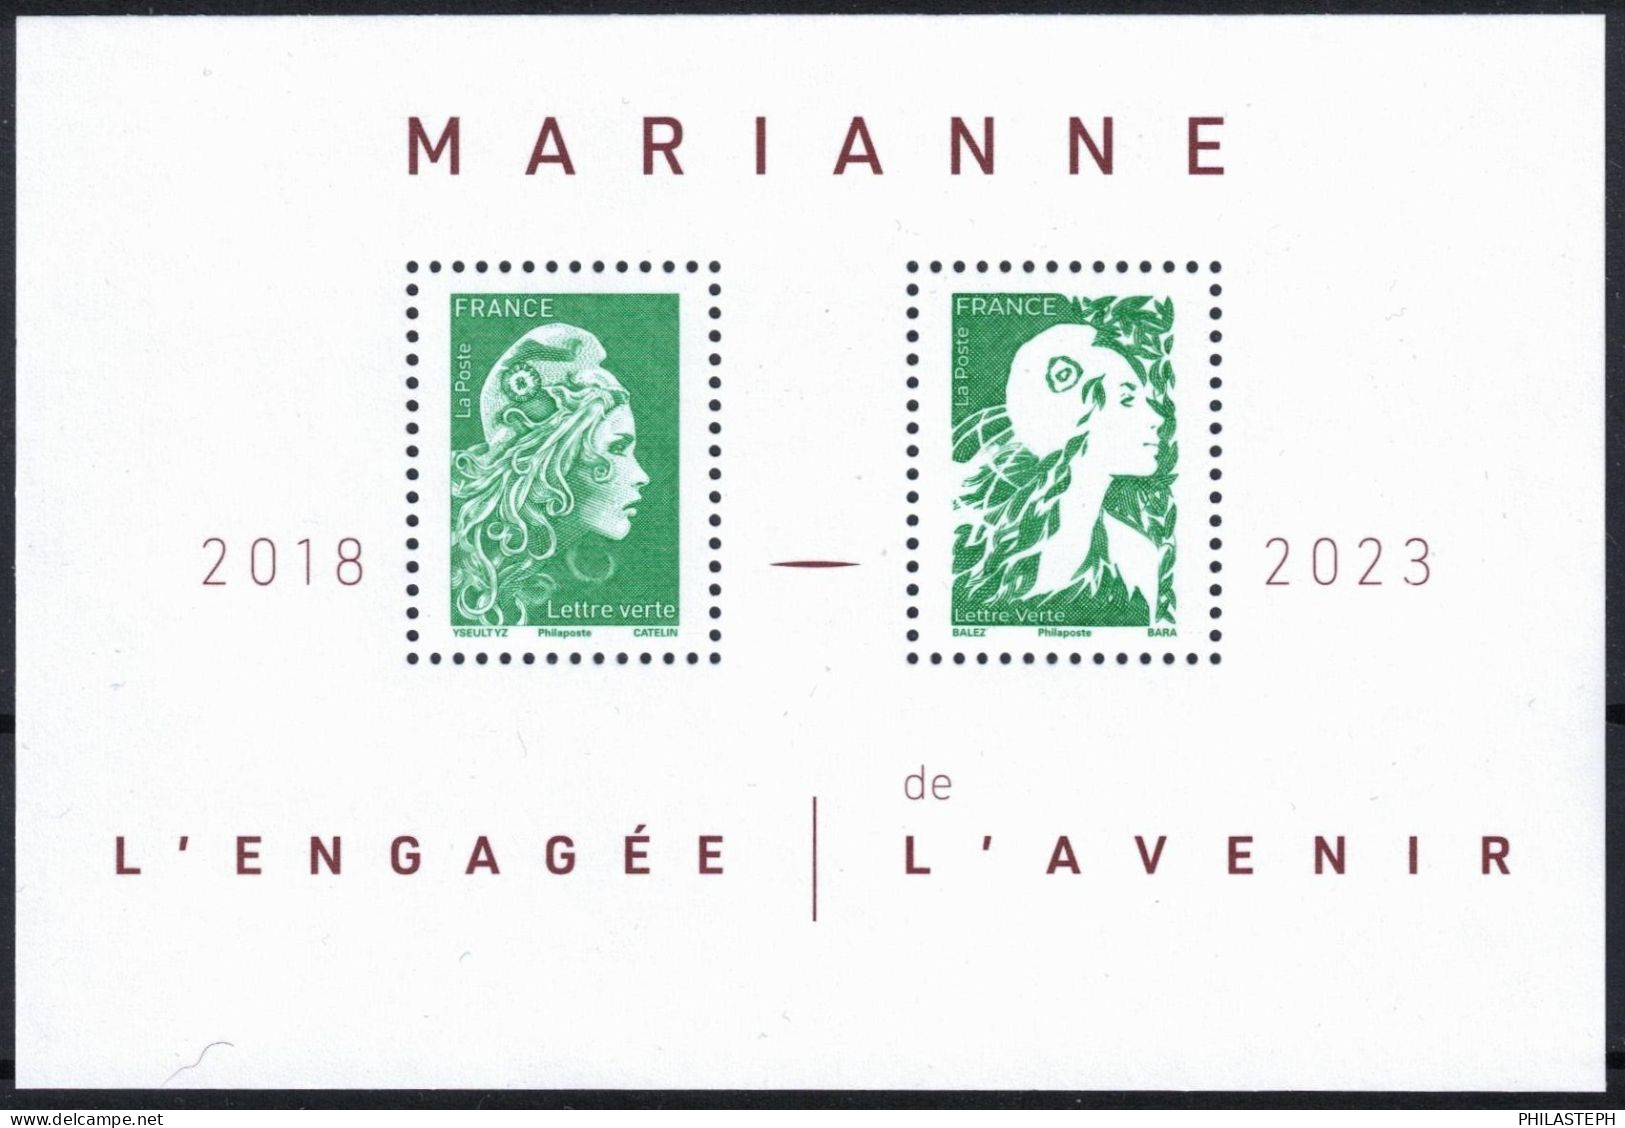 FRANCE 2024 -  Bloc Feuillet  LETTRE VERTE - MARIANNE L'ENGAGEE 2018 / MARIANNE DE L'AVENIR 2023 - BLOC YT 158 Neuf ** - Ungebraucht